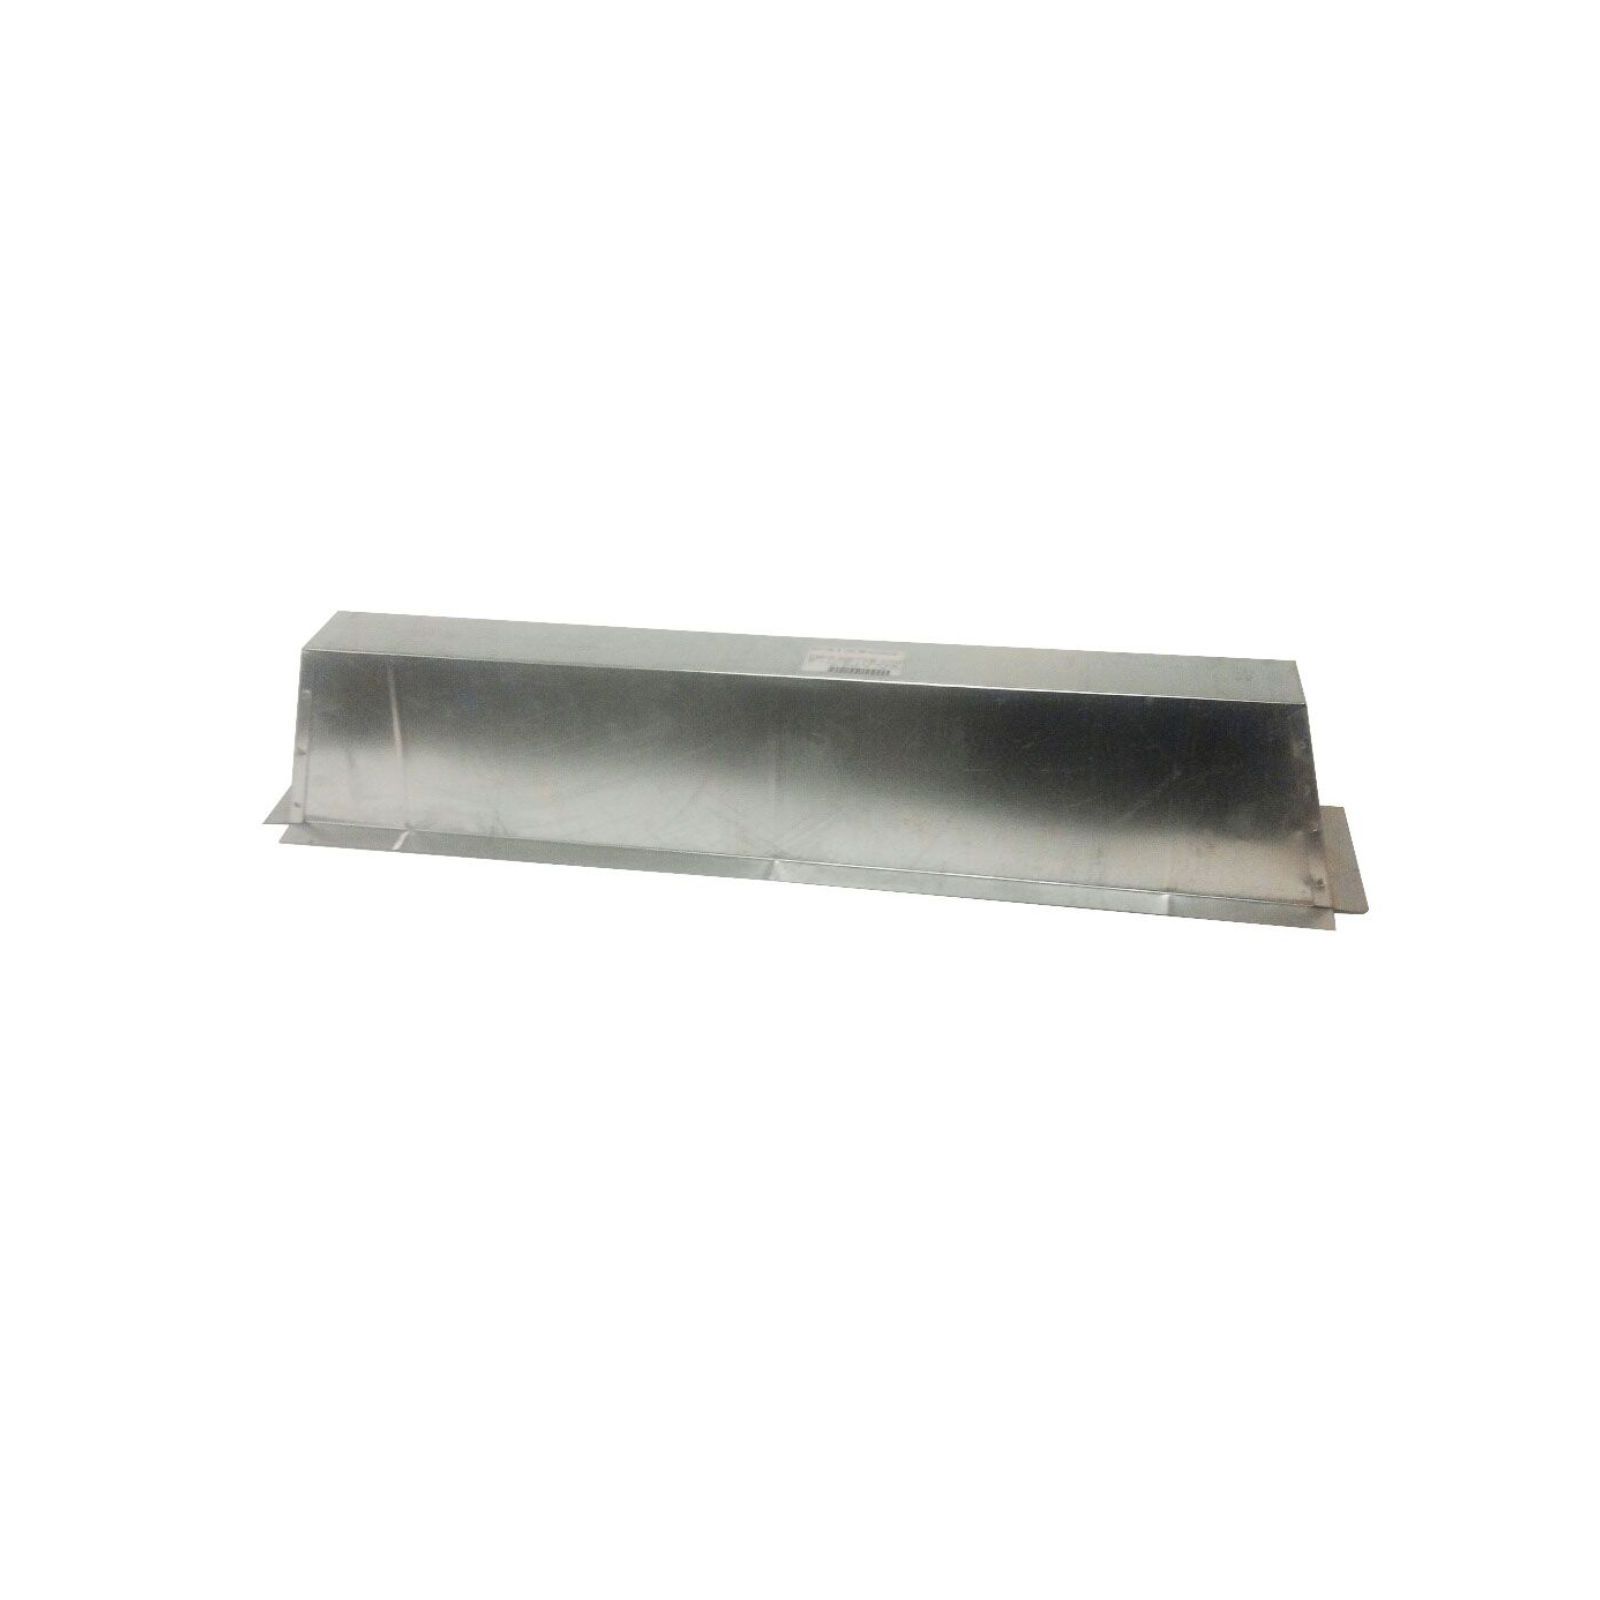 Modular Metal XXESH3306 - Furnace Stand - 28 Gauge - 1" Flange (4)Sides33" X 5.5" /30" X 2.5" - 6" High